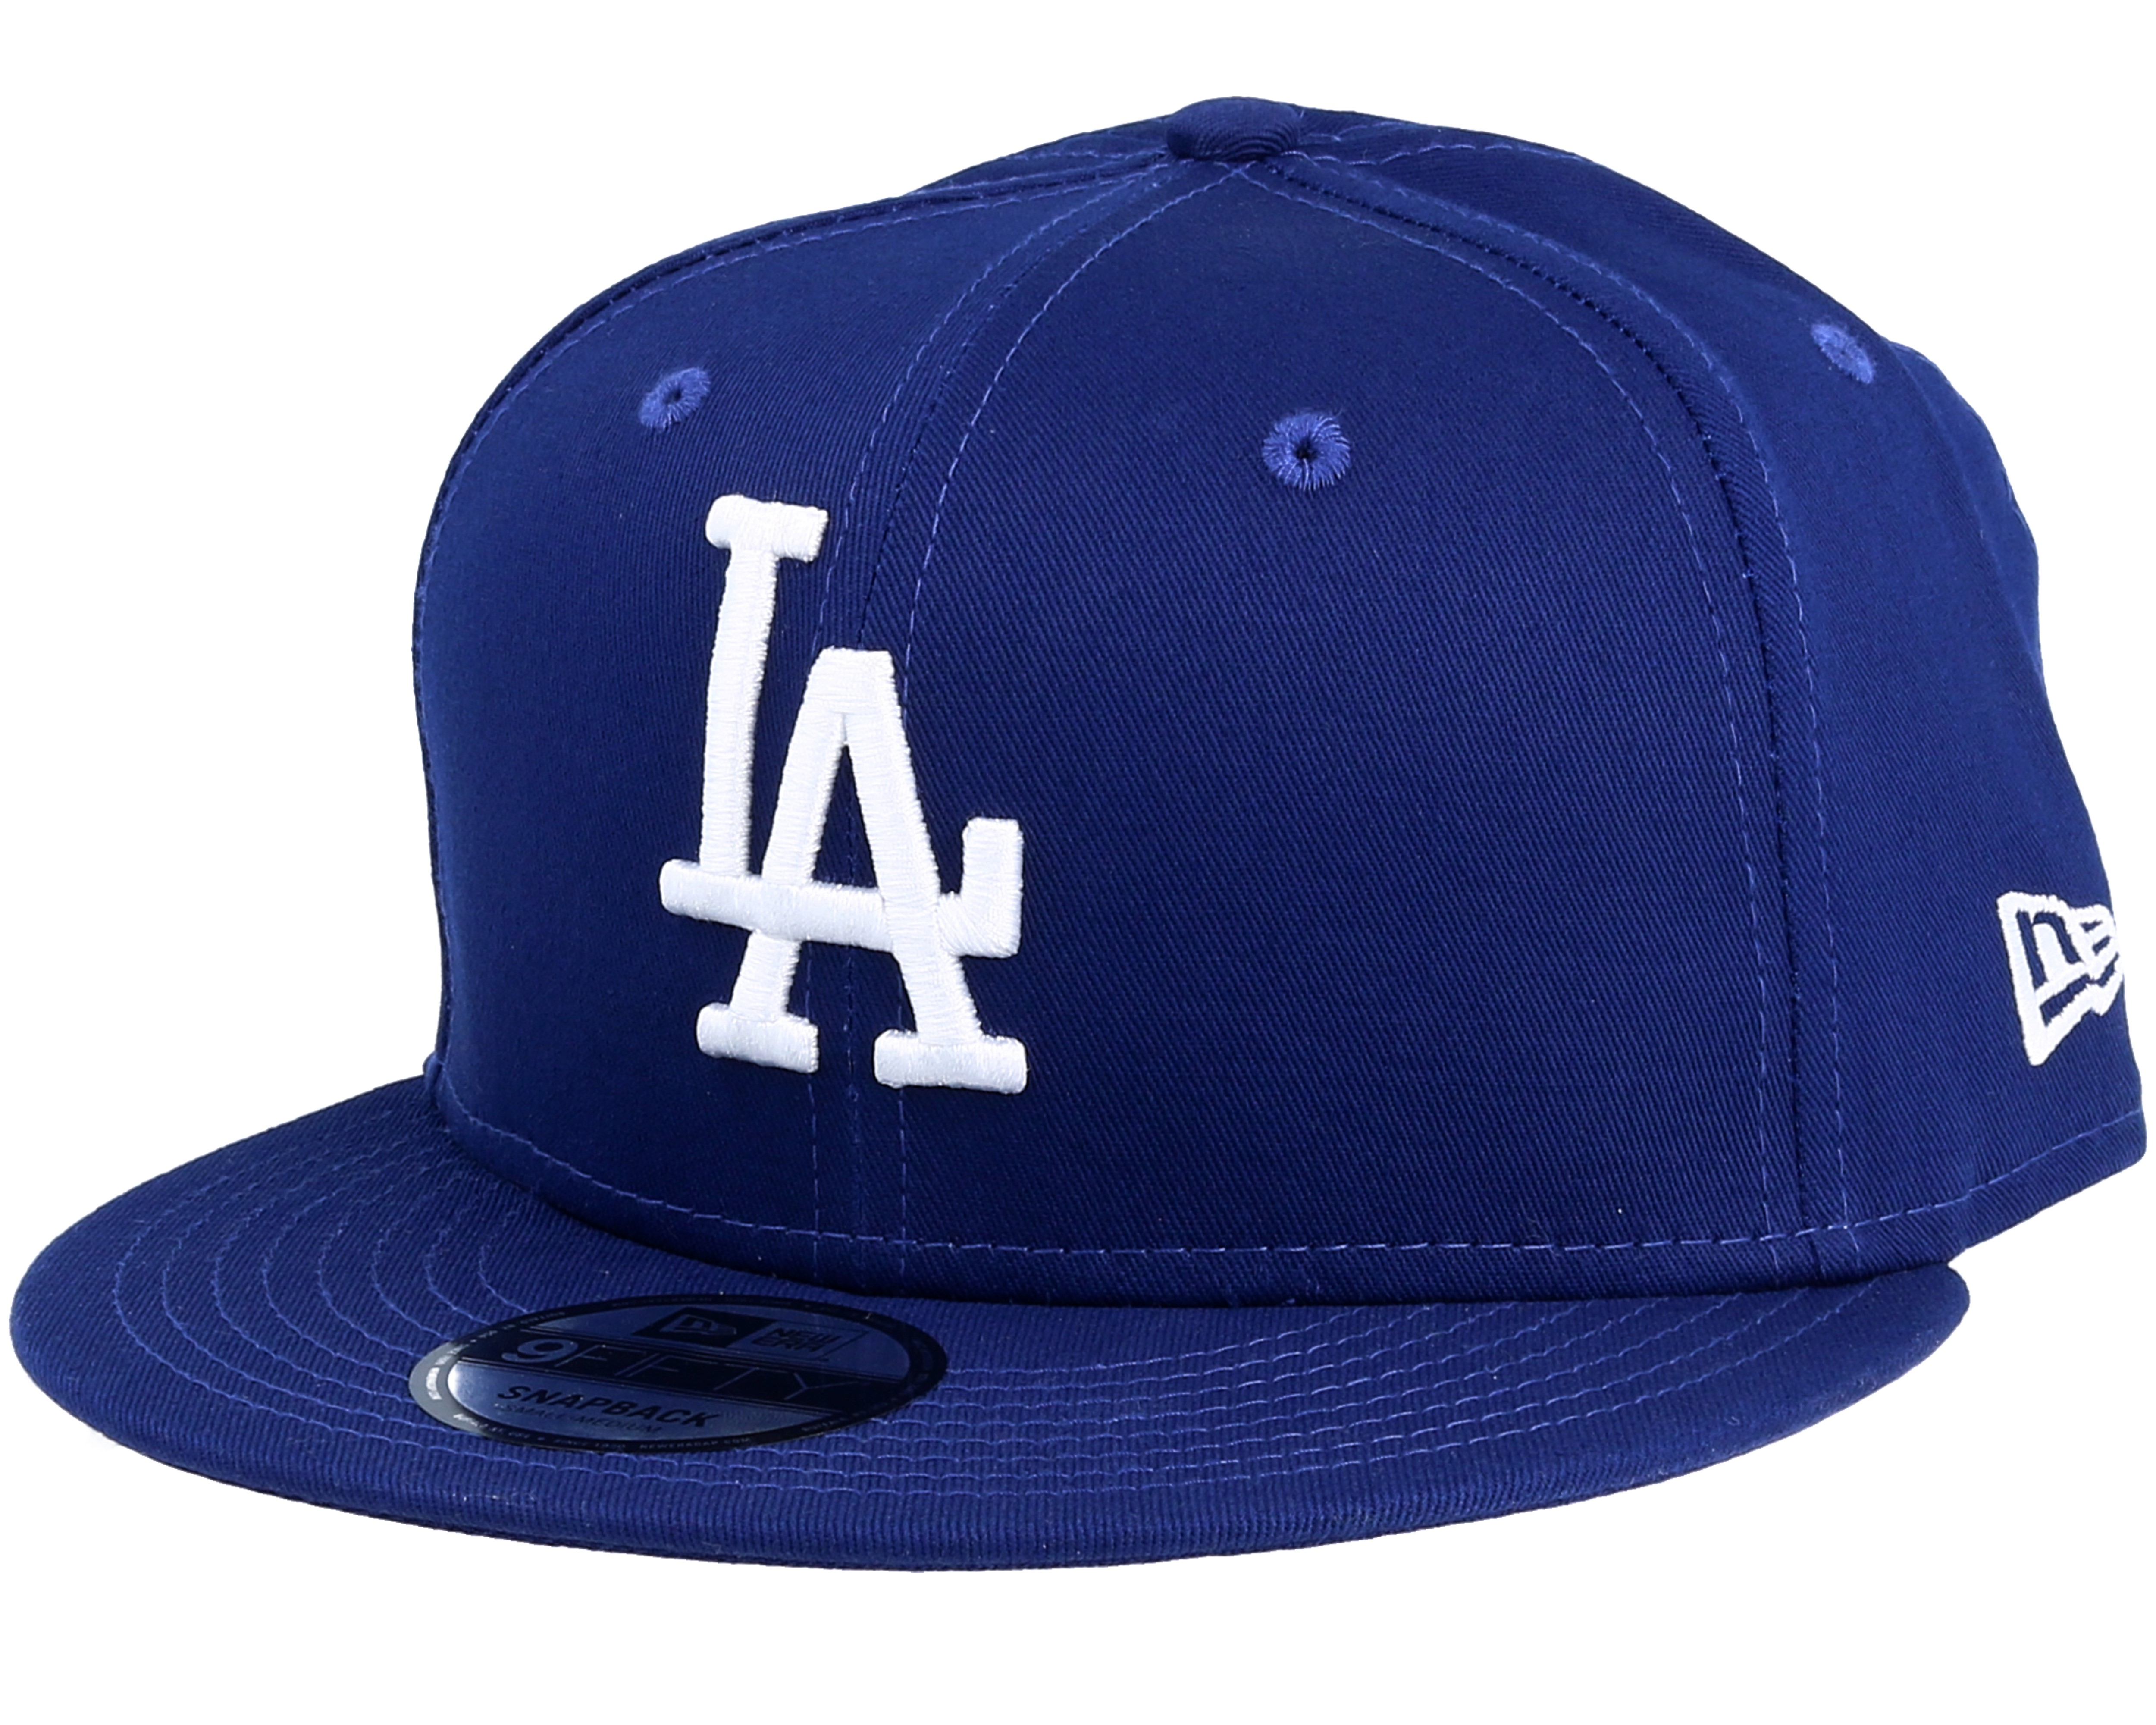 LA Dodgers 9fifty Snapback New Era casquette Hatstore.fr